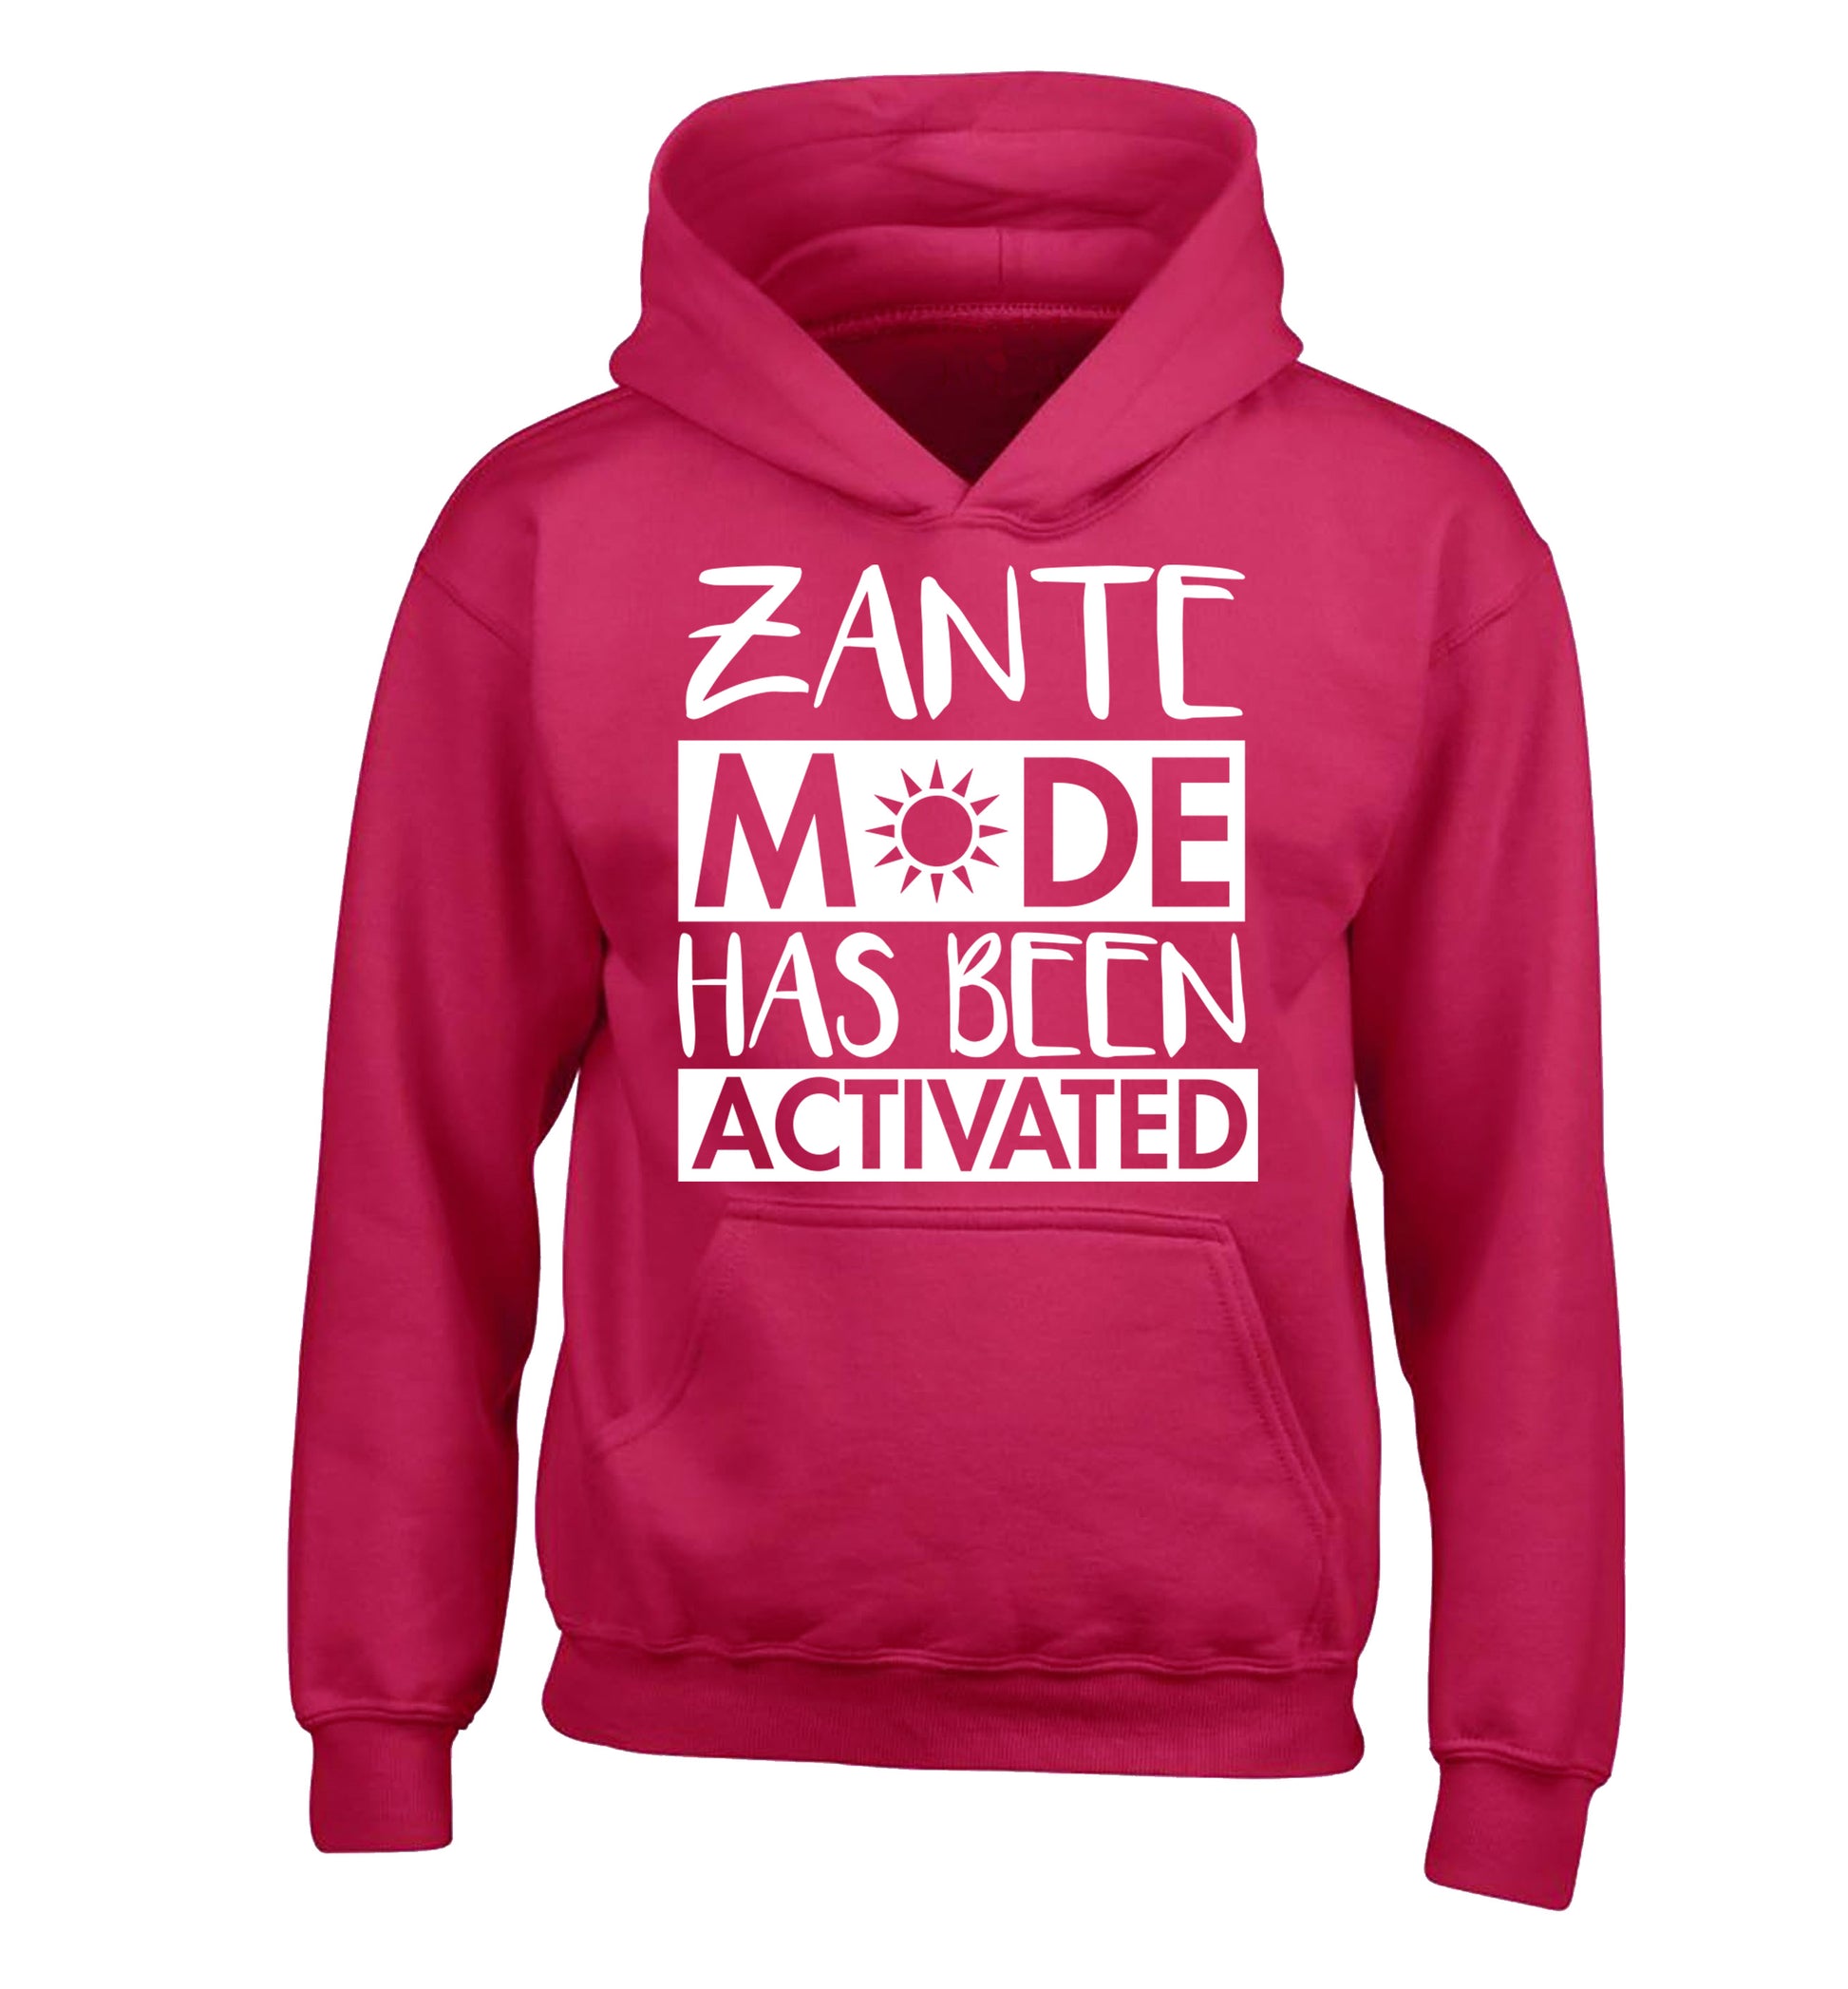 Zante mode has been activated children's pink hoodie 12-13 Years